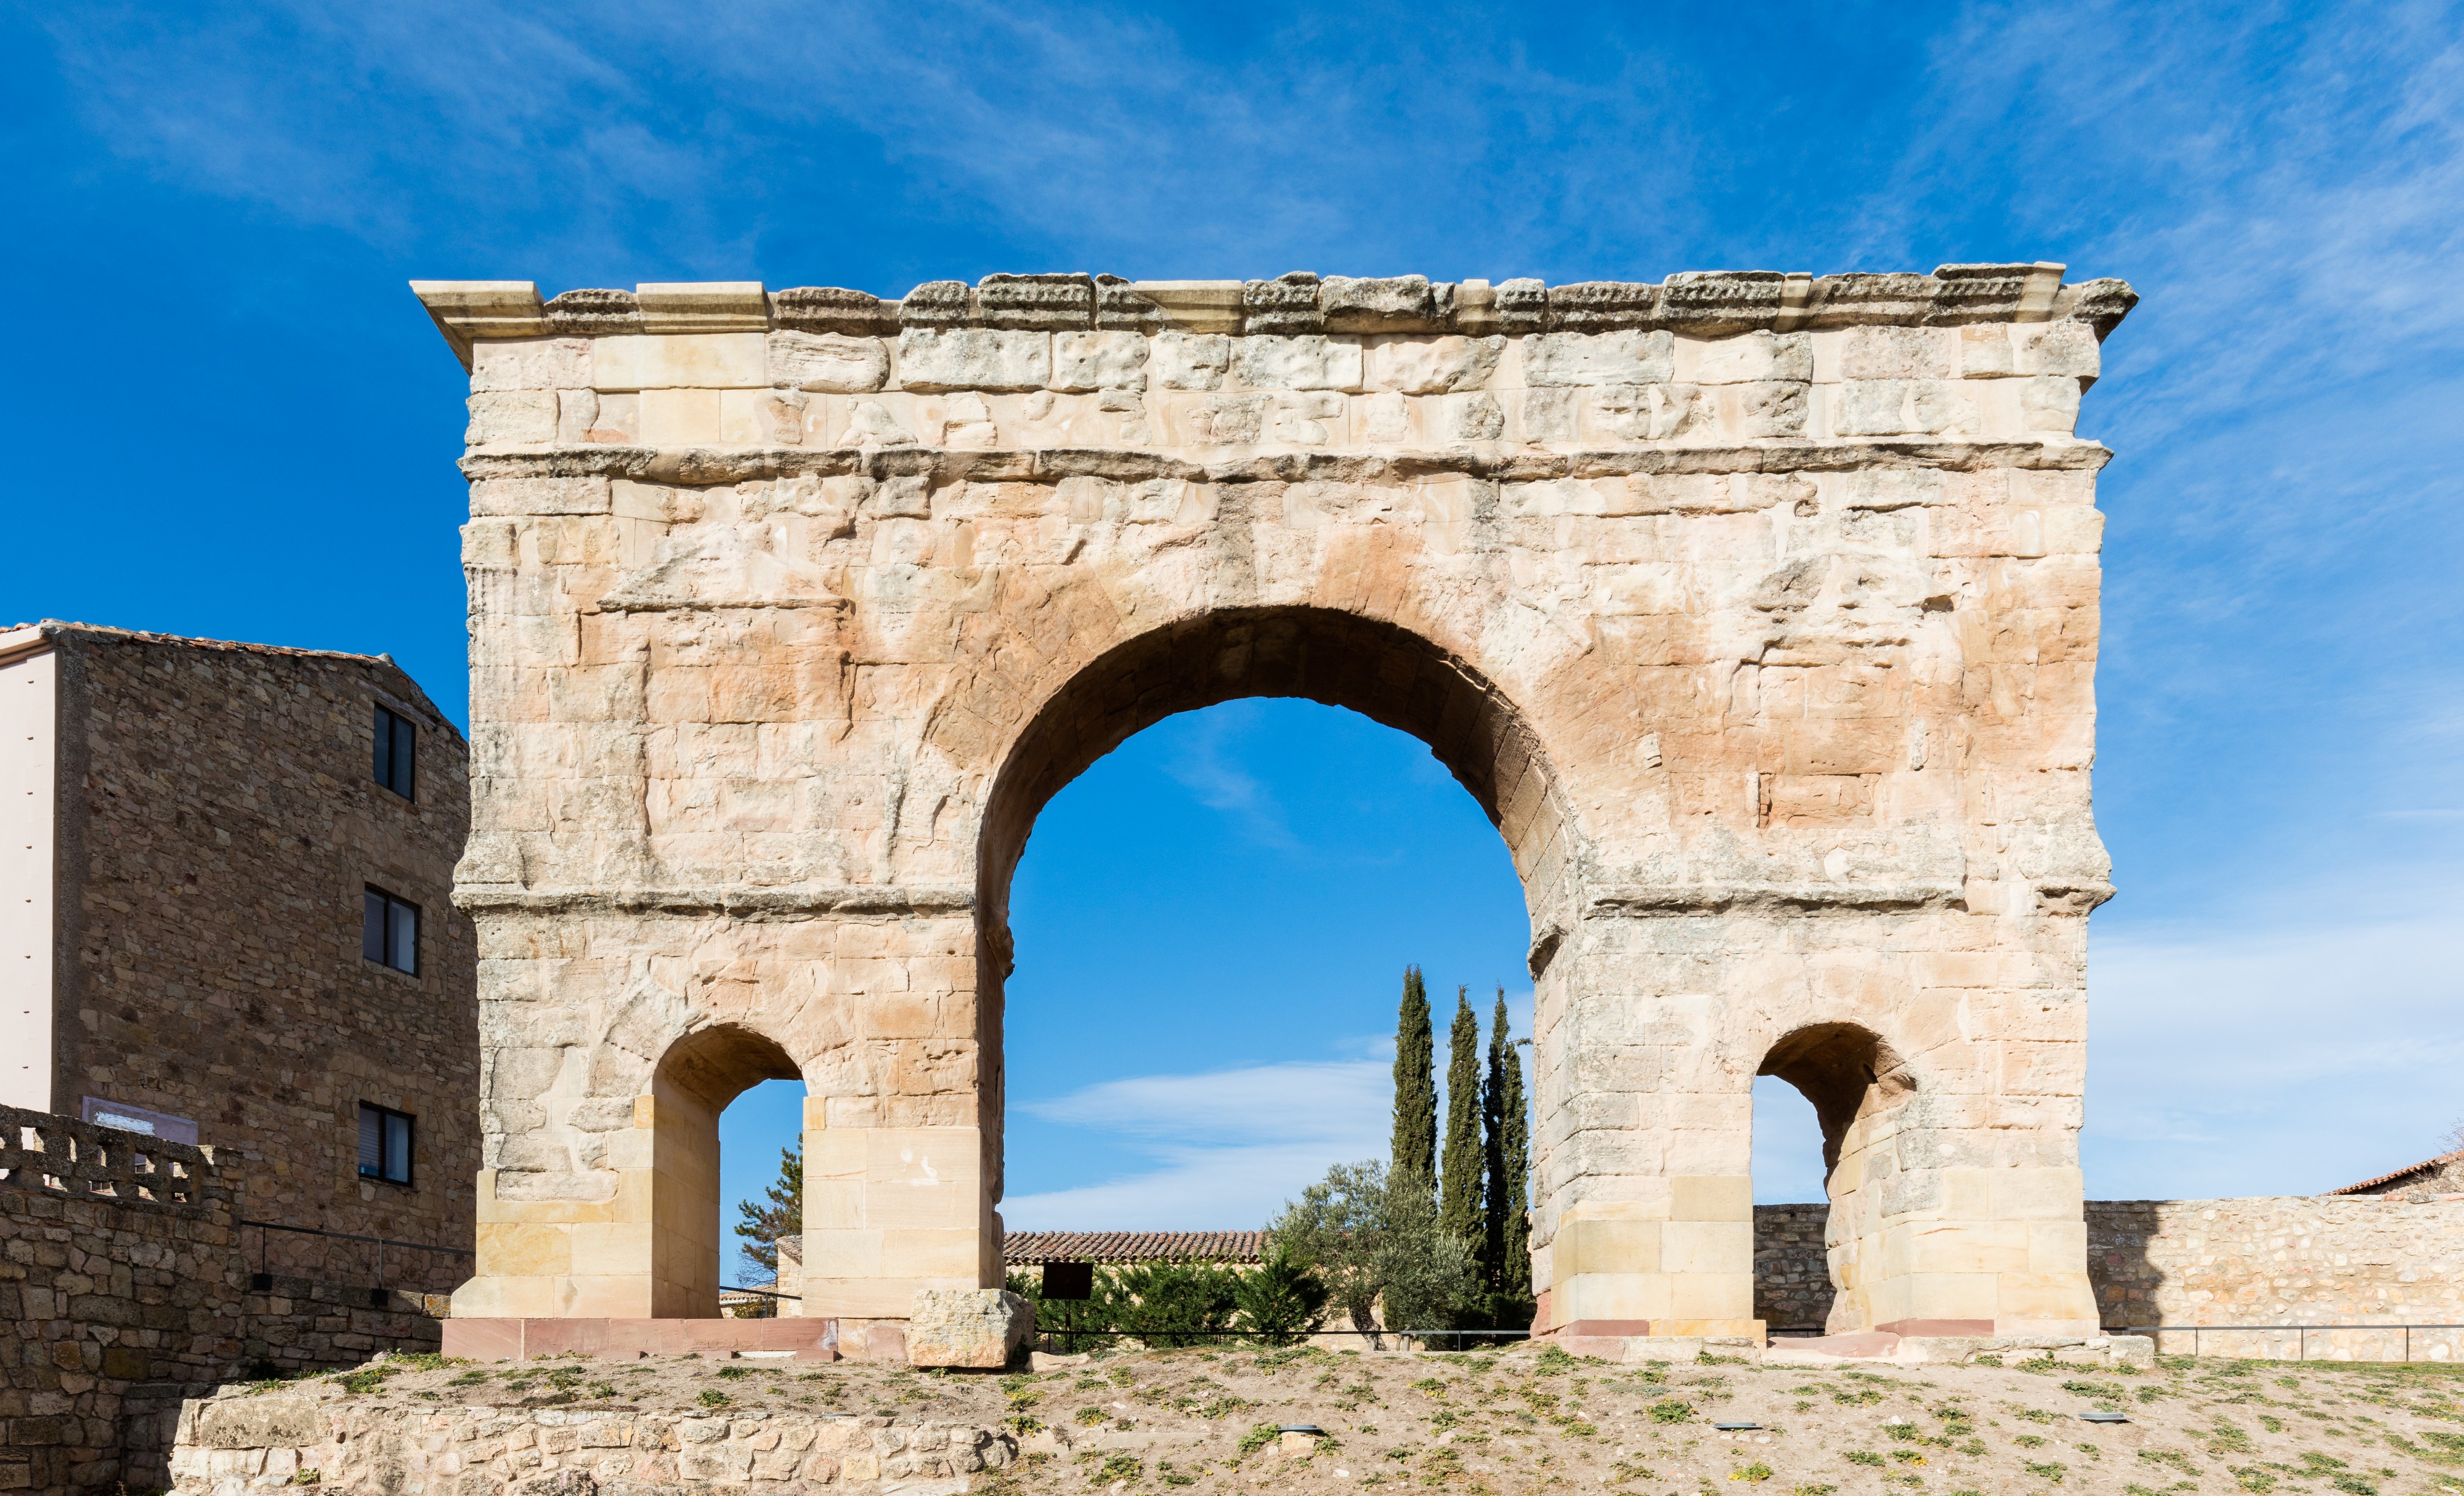 Arco romano, Medinaceli, Soria, España, 2015-12-28, DD 106